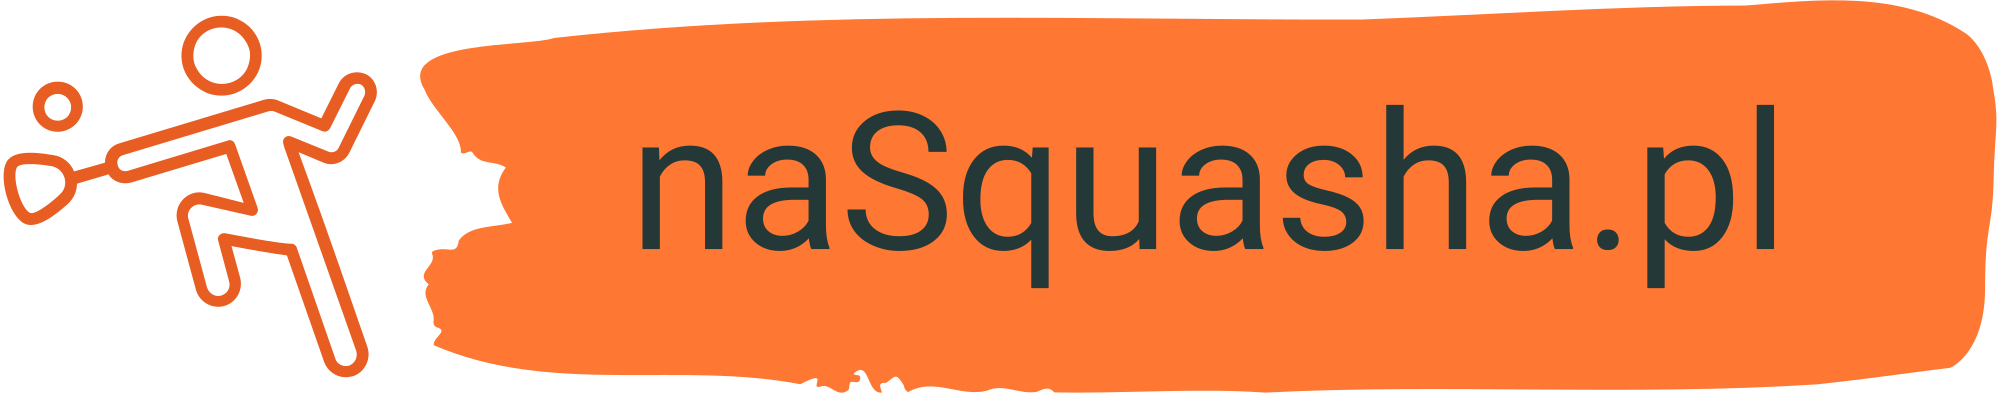 nasquasha logo